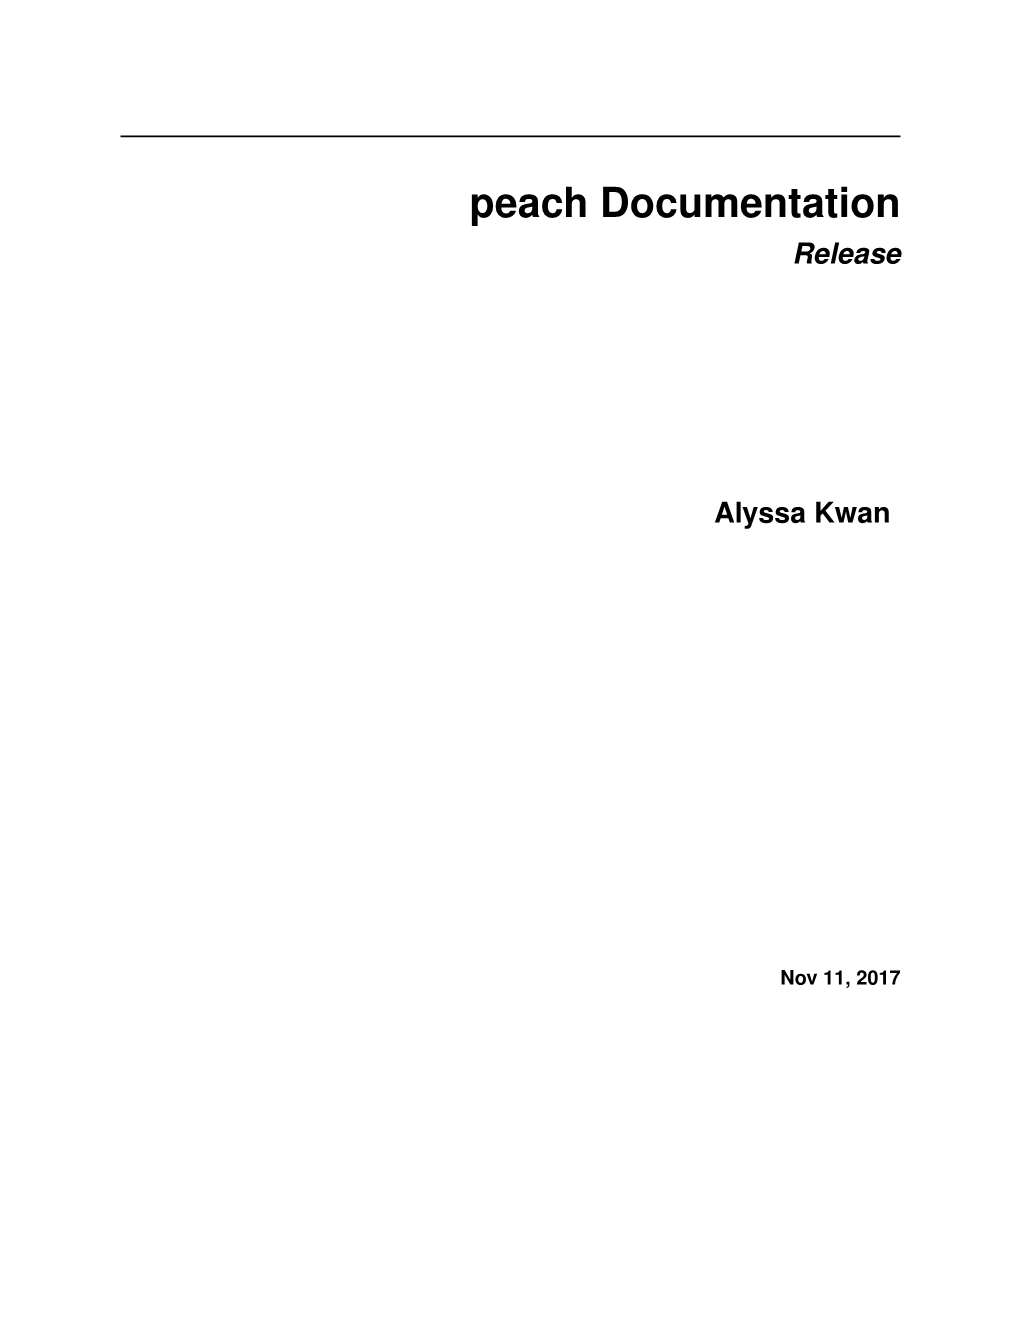 Peach Documentation Release